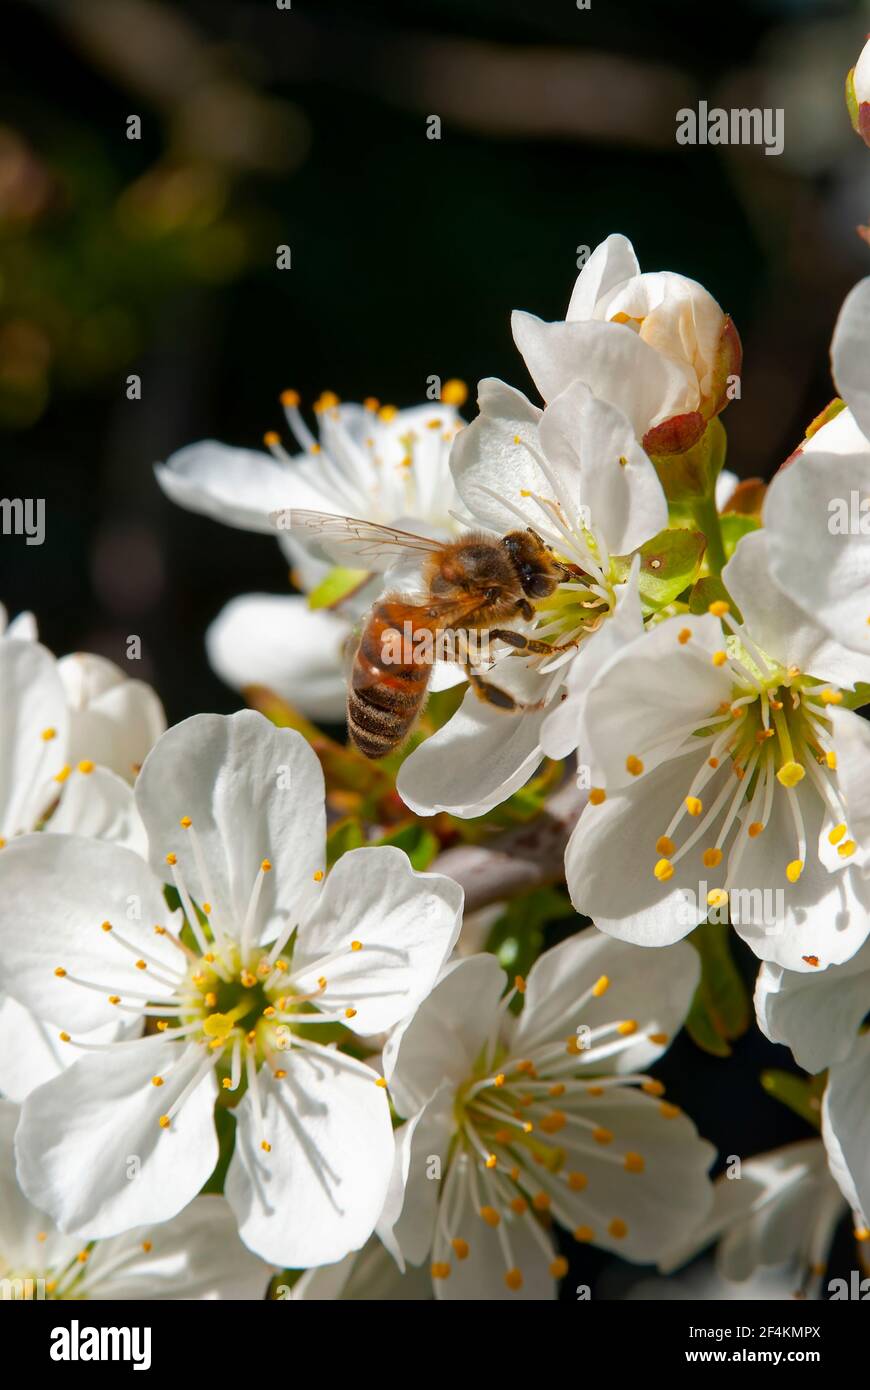 Carniolan honey bee (Apis mellifera carnica) on cherry blossom. Stock Photo